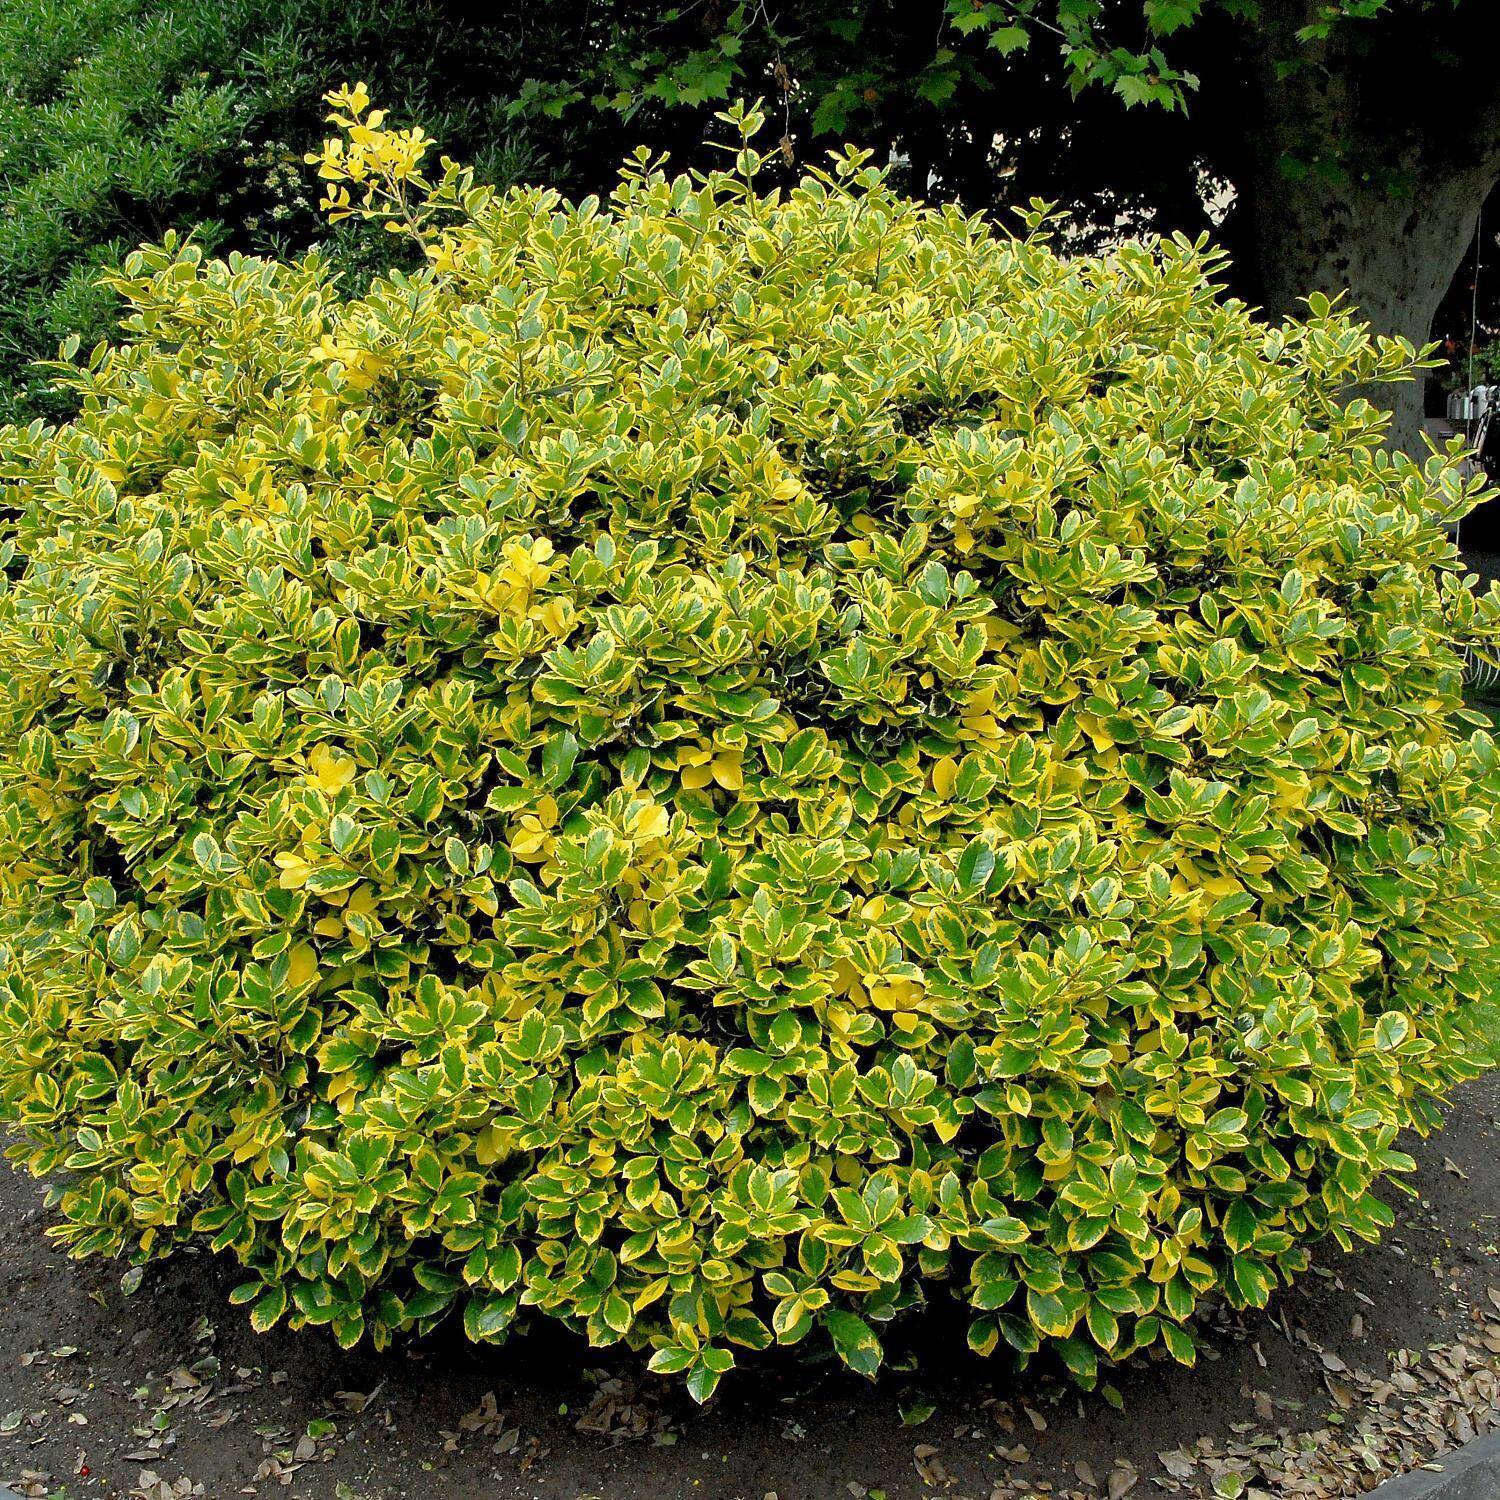  Gelbbunte Stechpalme 'Golden van Tol' - Ilex aquifolium 'Golden van Tol'